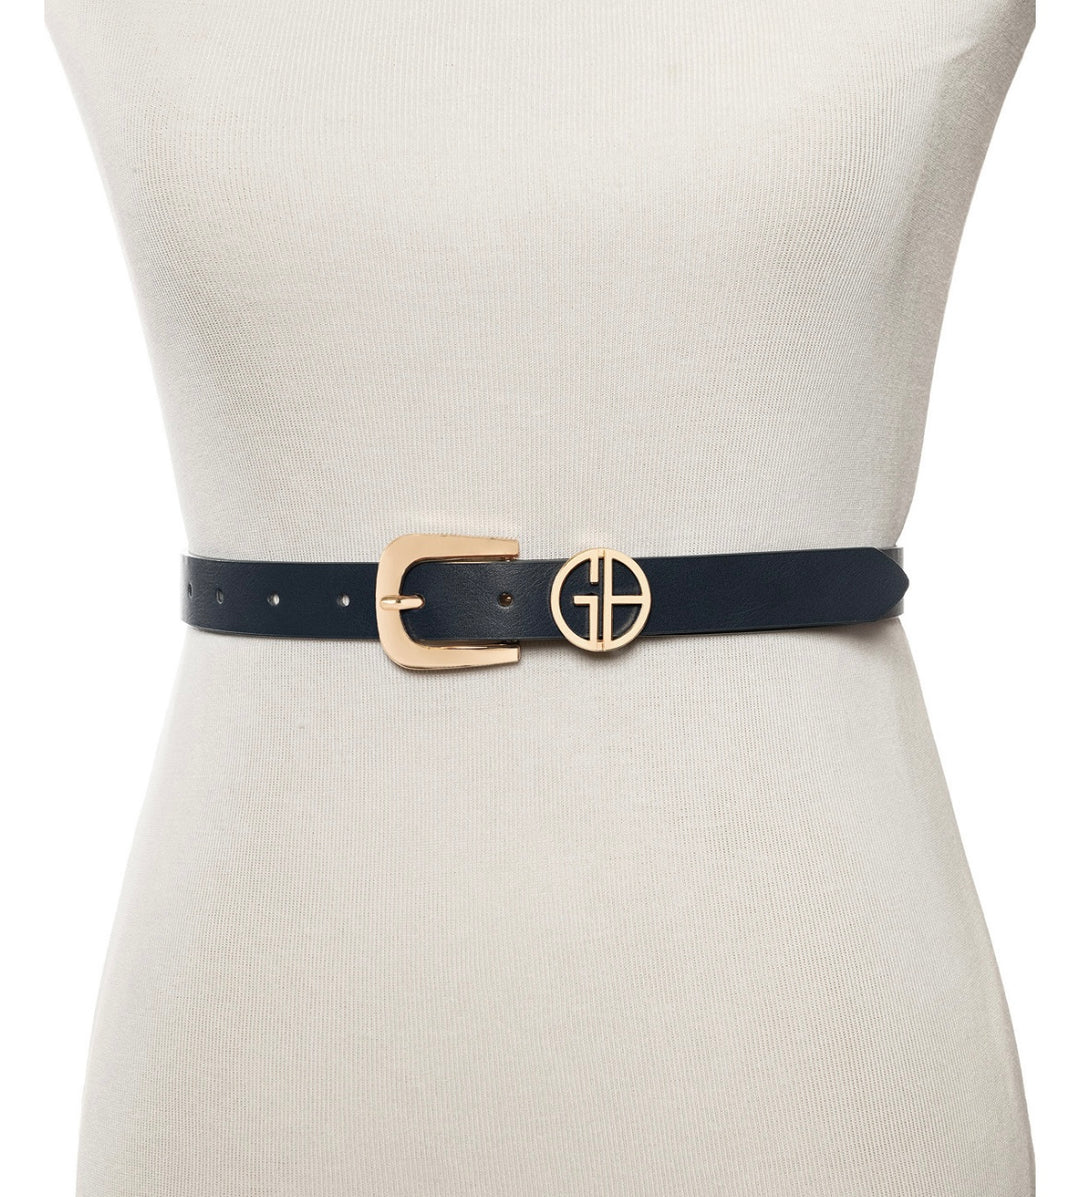 Giani Bernini Women's Single Prong Puckle Logo Keeper Belt Navy Black